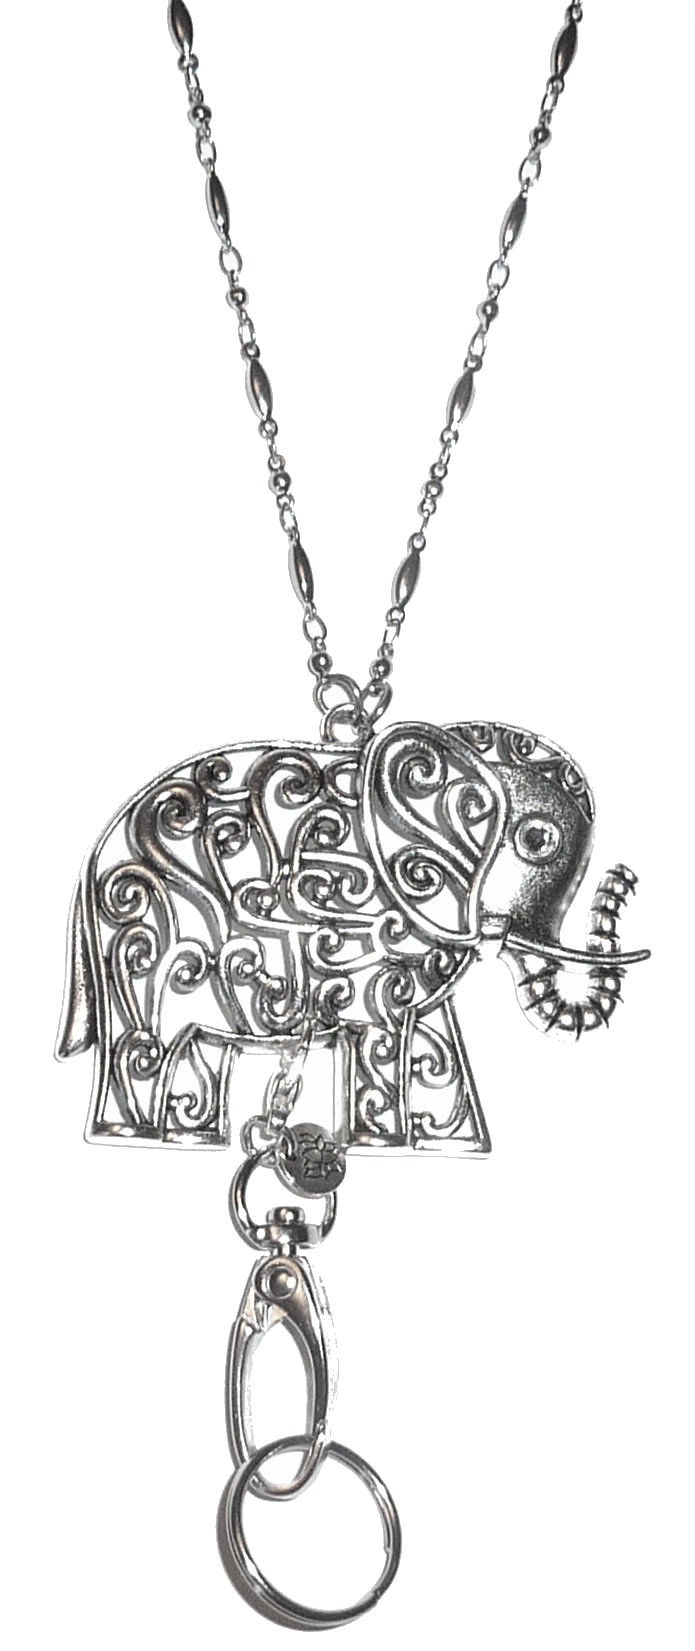 Silver Elephant Necklace Lanyard - Stylish ID Badge Holder - Non-Breakaway